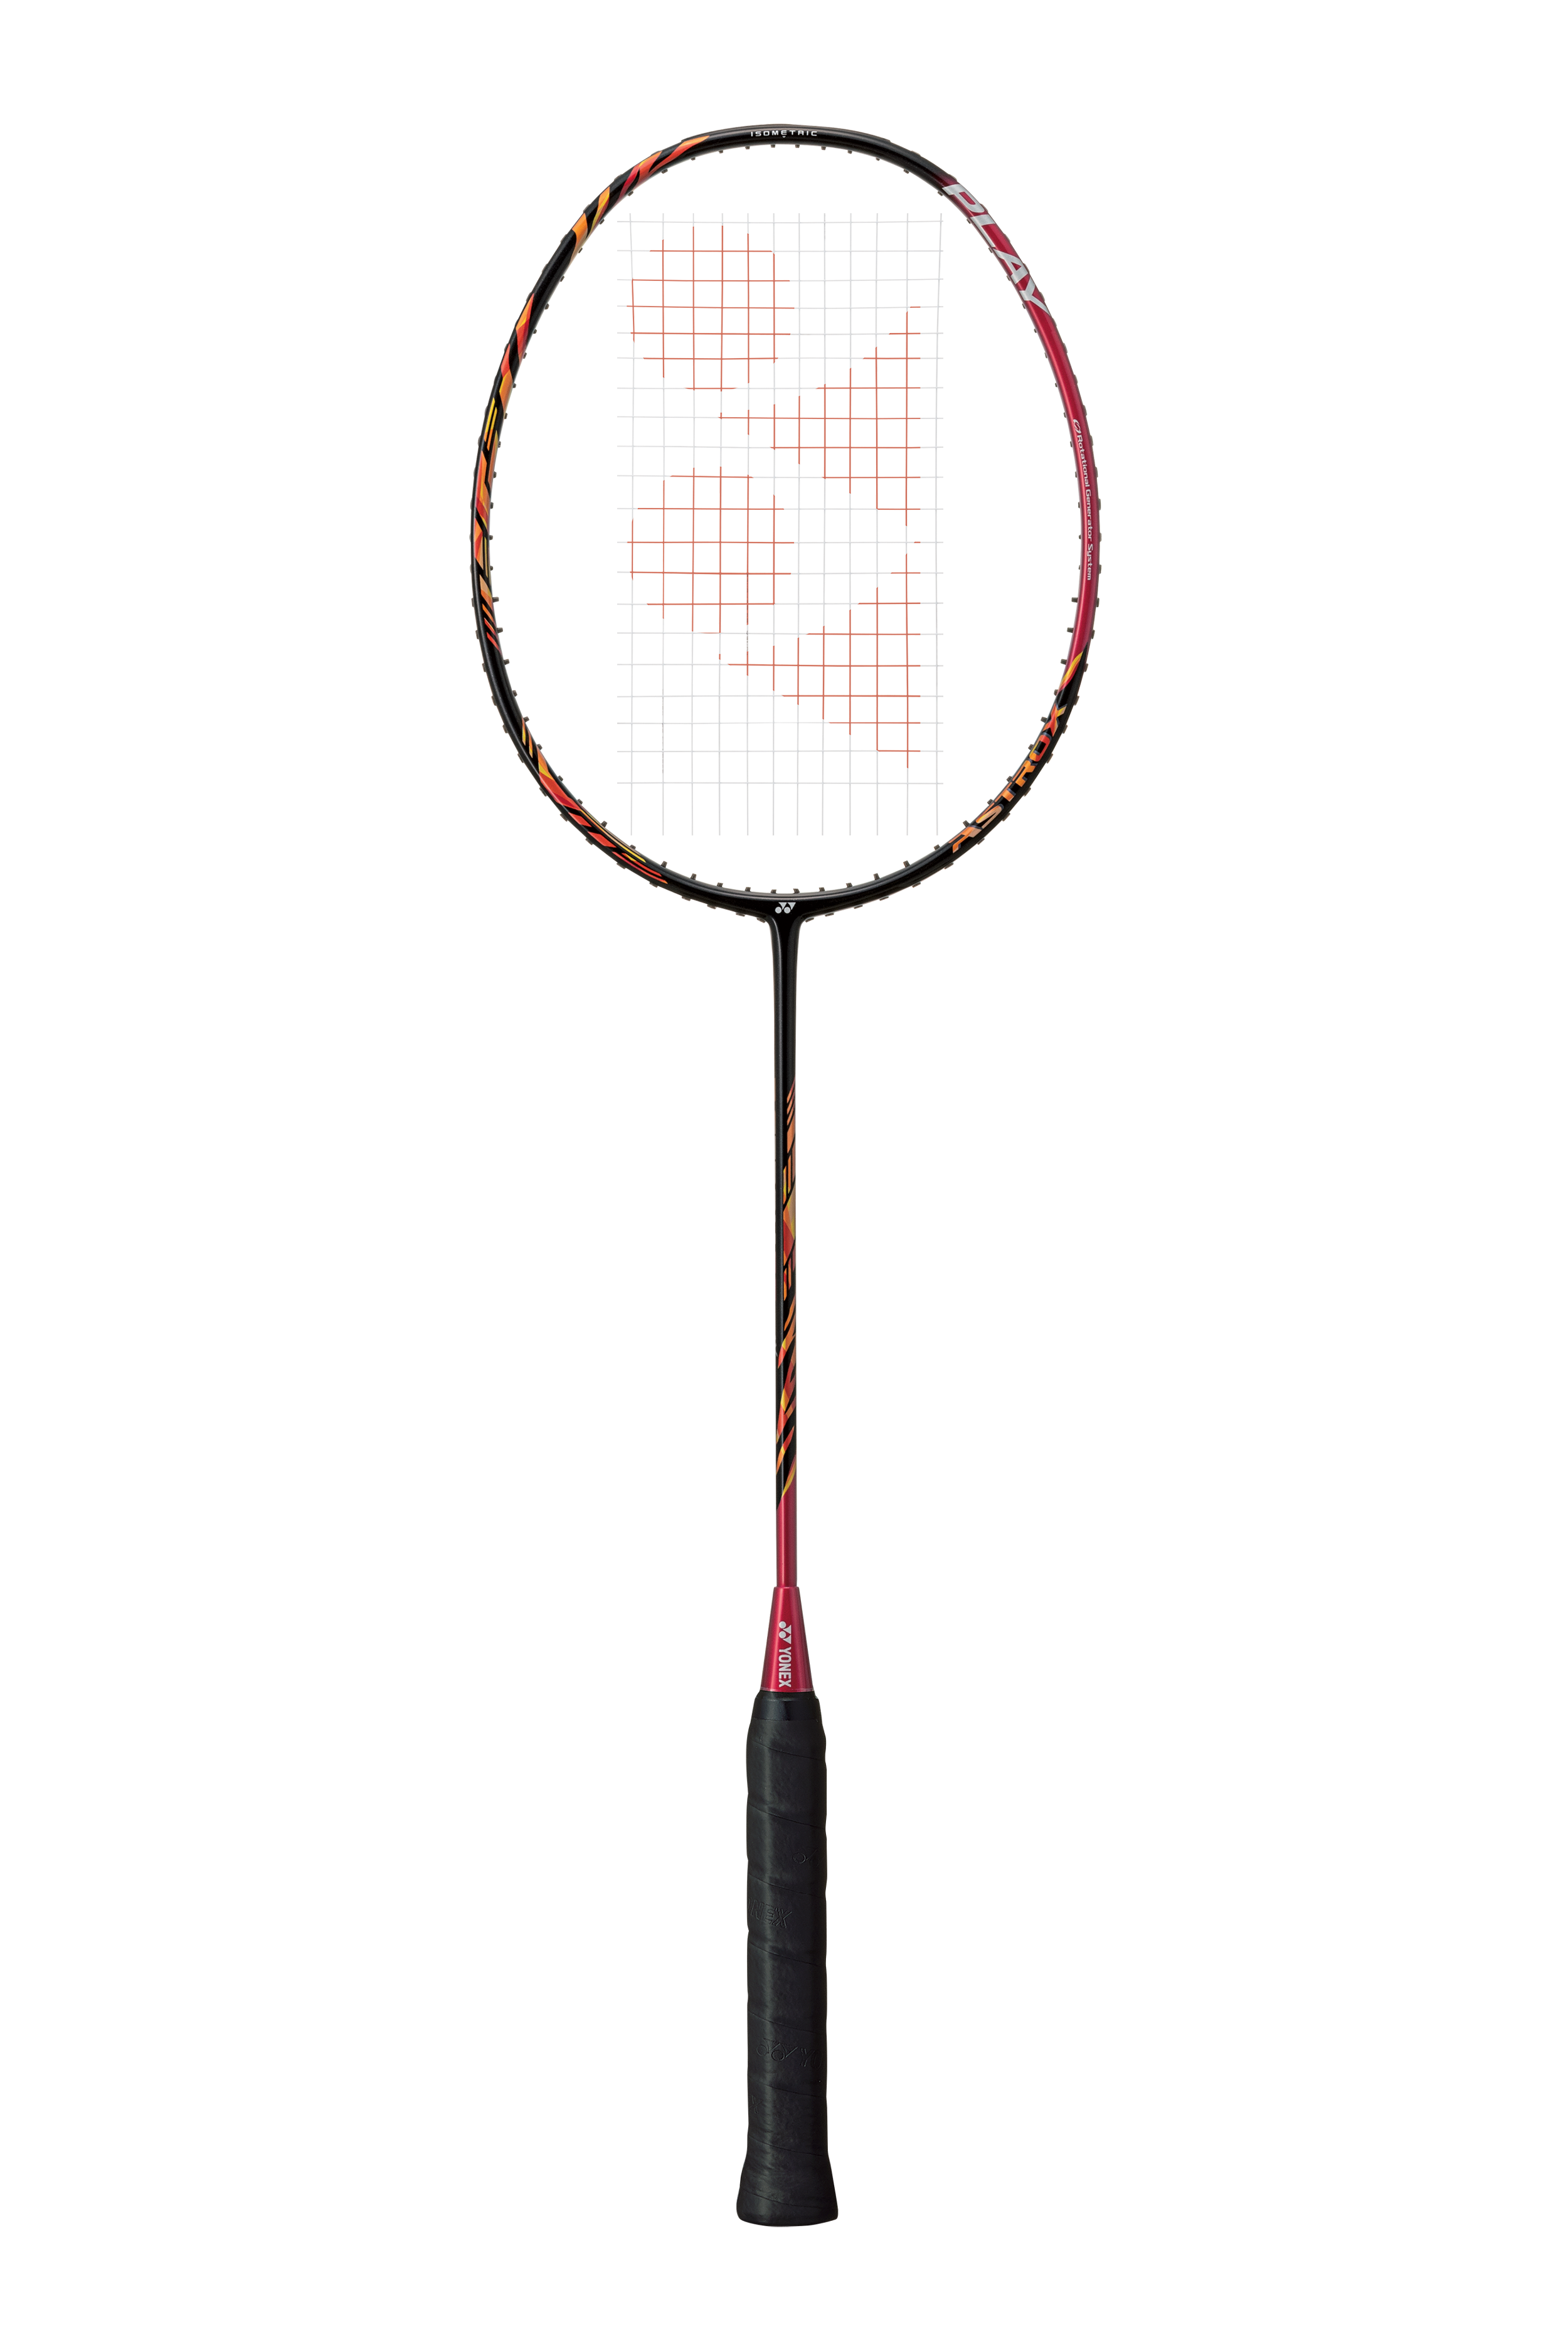 YONEX ASTROX 99 Play Badminton Racquet Cherry Sunbrust AX99PL 4UG5, Strung